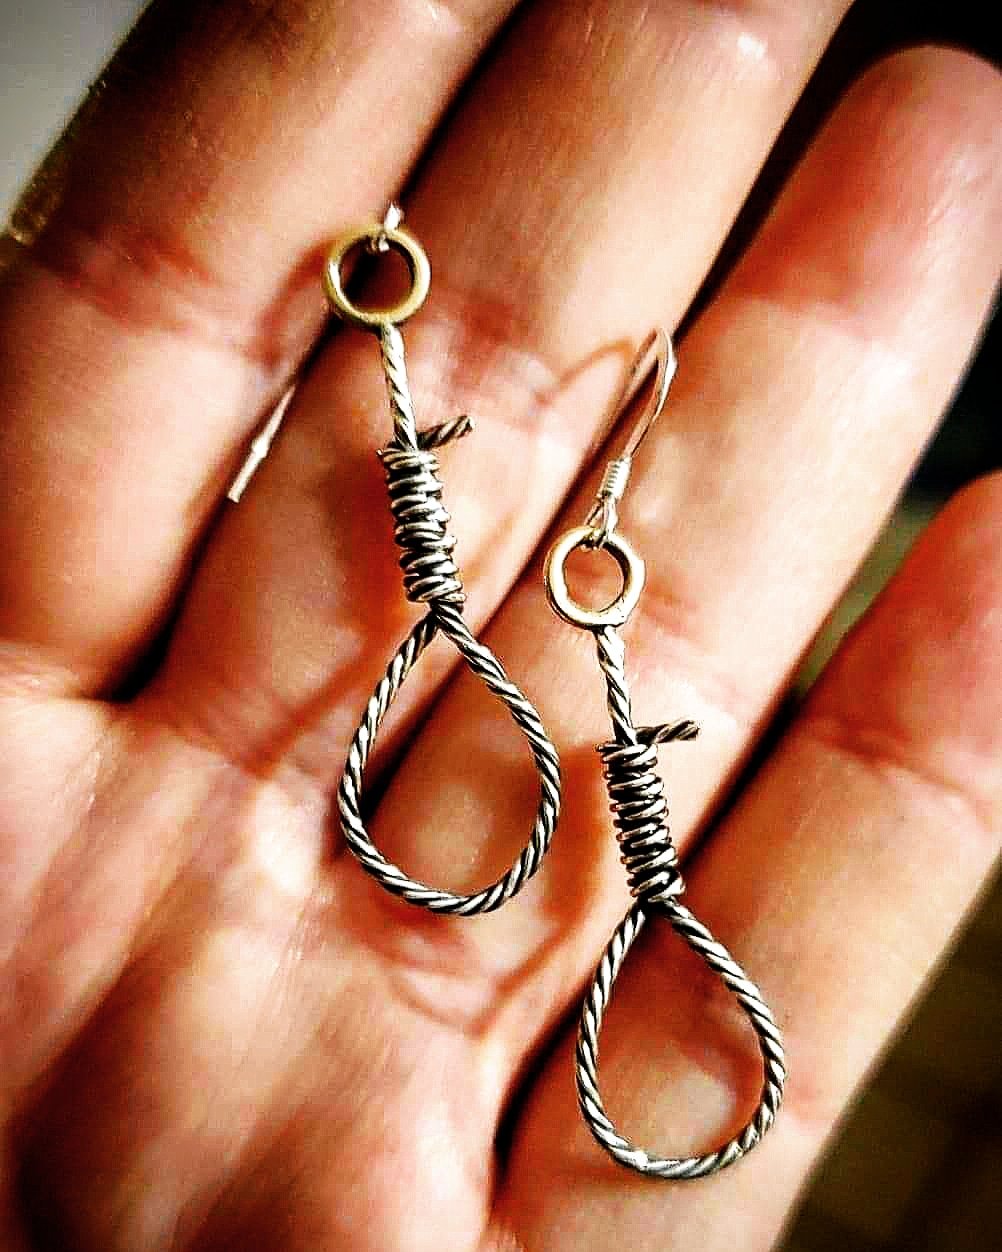 Tiny Hangman's Noose earrings